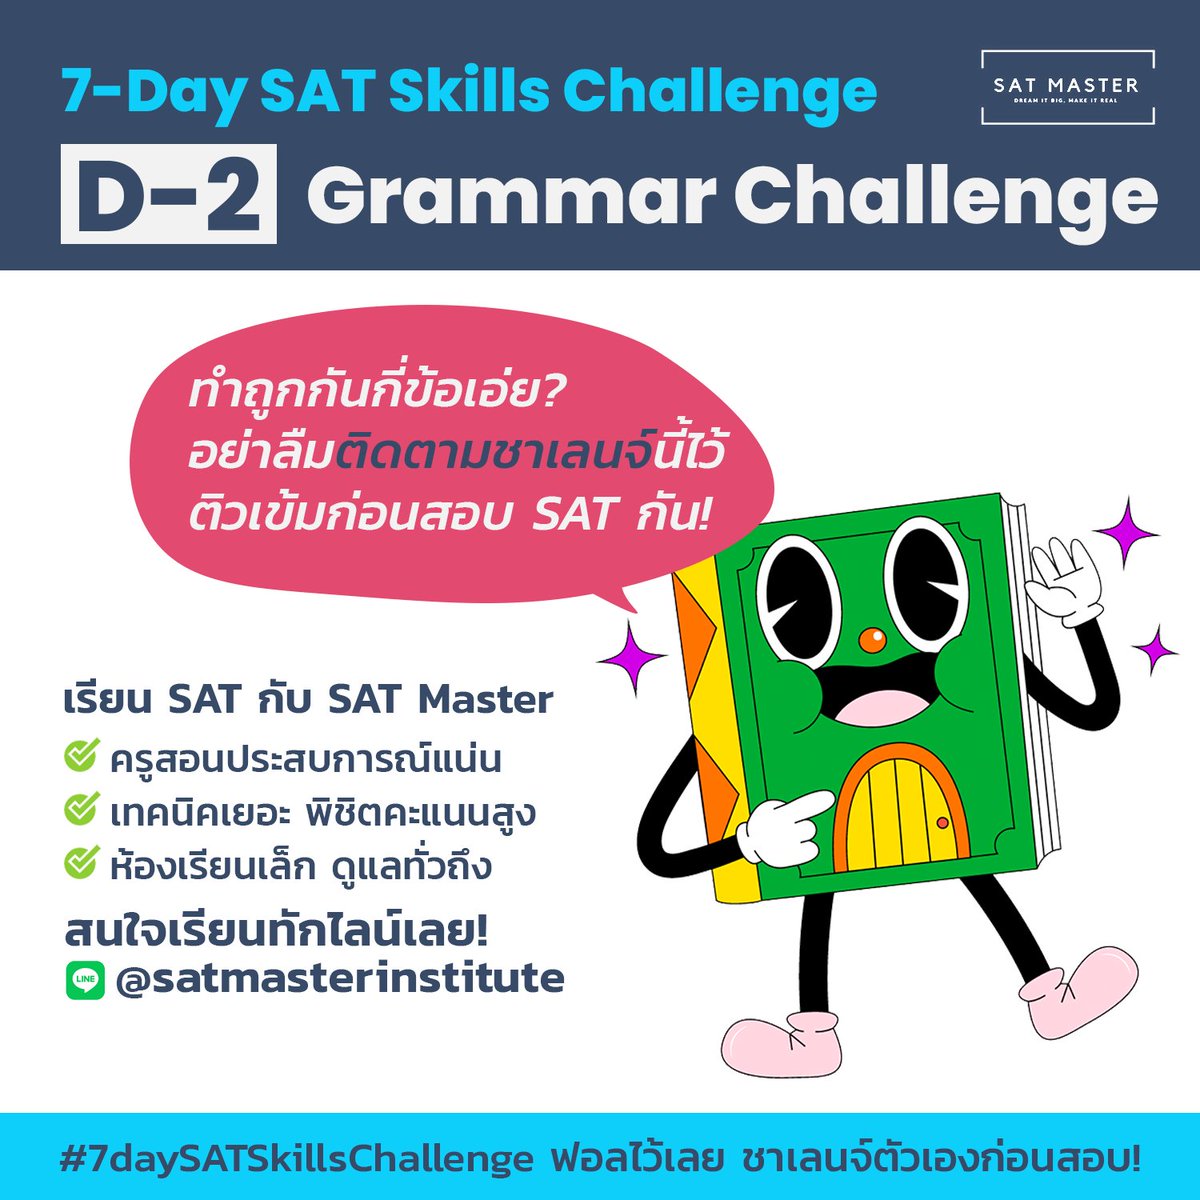 🔥#7Day_SAT_Skill_Challenge #Day2 2/2🎯
วันนี้ว่าด้วยเรื่อง Grammar กันค่ะ ใครทำได้มั่ง ยกมือ 🤟
.
ใกล้สอบเข้าไปทุกทึ วันนี้พี่ๆมาชวนทำโจทย์ไปด้วยกัน
โค้งสุดท้ายแล้ว มี SAT Master ติวเป็นเพื่อนน๊า ❤
👍กดติดตามช่องเราไว้ แล้วมาอัปเดต 4 โมงเย็นทุกวัน
.
Line@ : @SatMaster